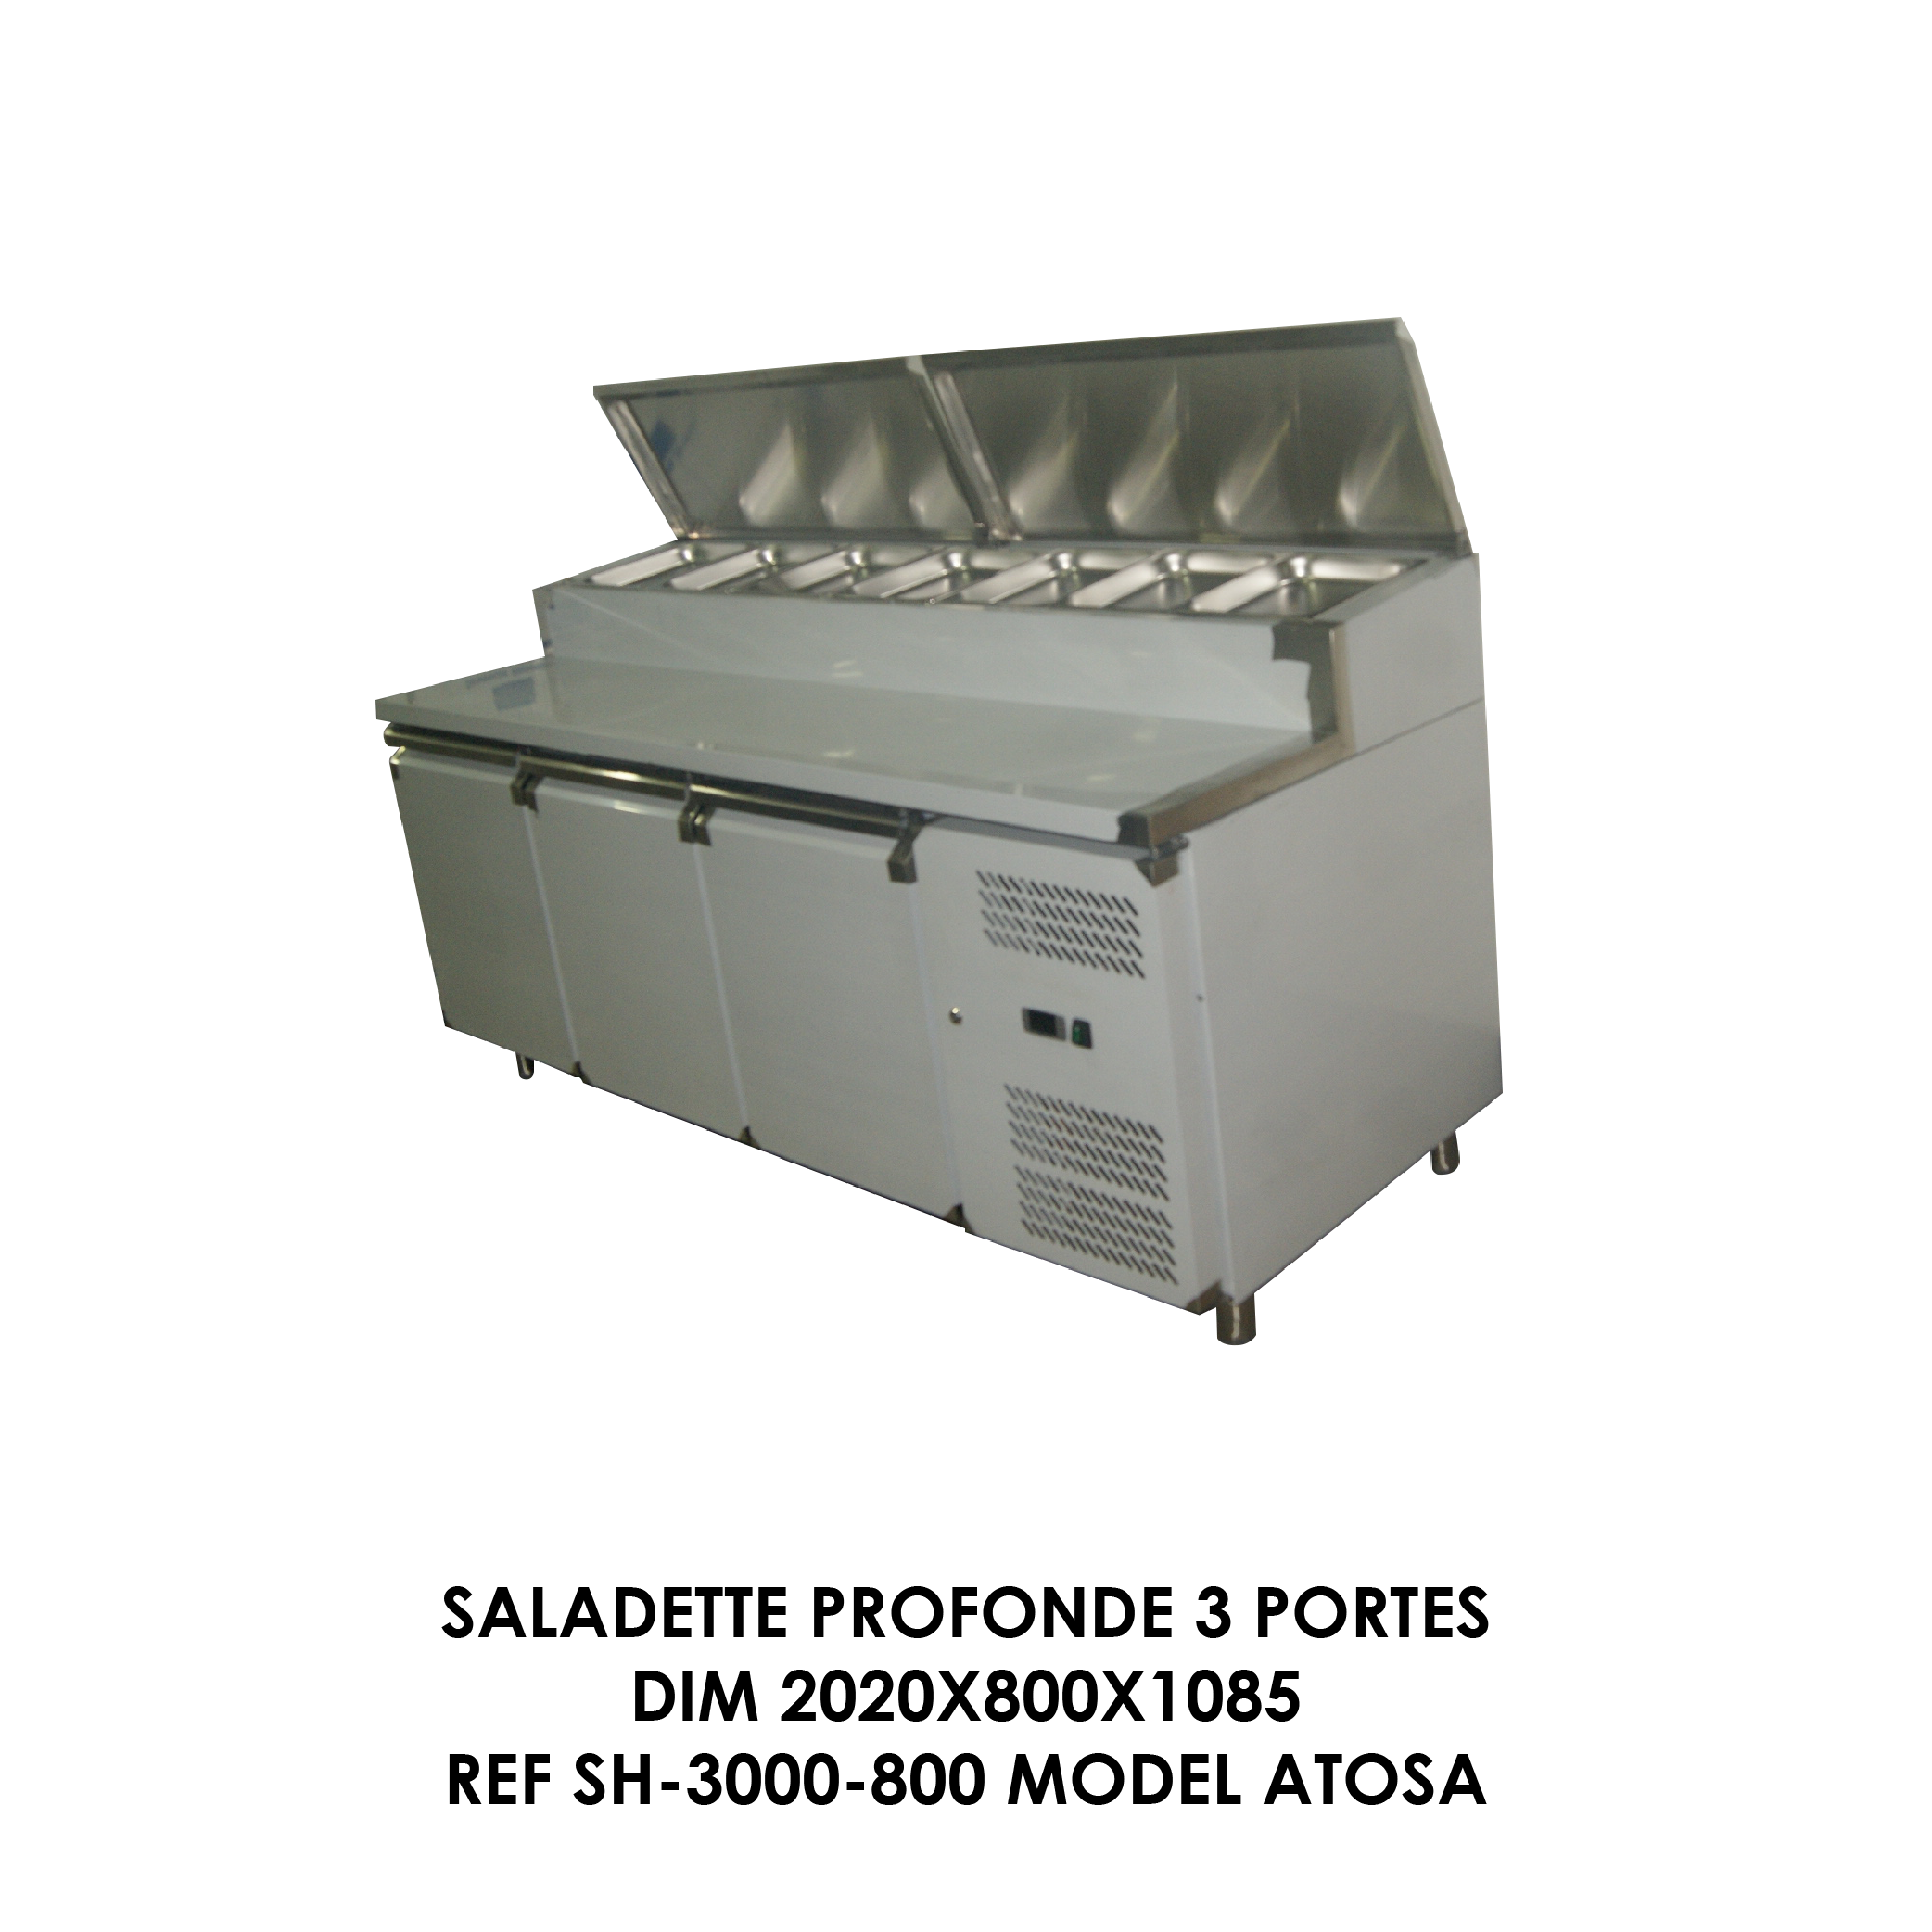 SALADETTE PROFONDE 3 PORTES DIM 2020X800X1085 REF SH-3000-800 MODEL ATOSA -  Maroc cuisine pro